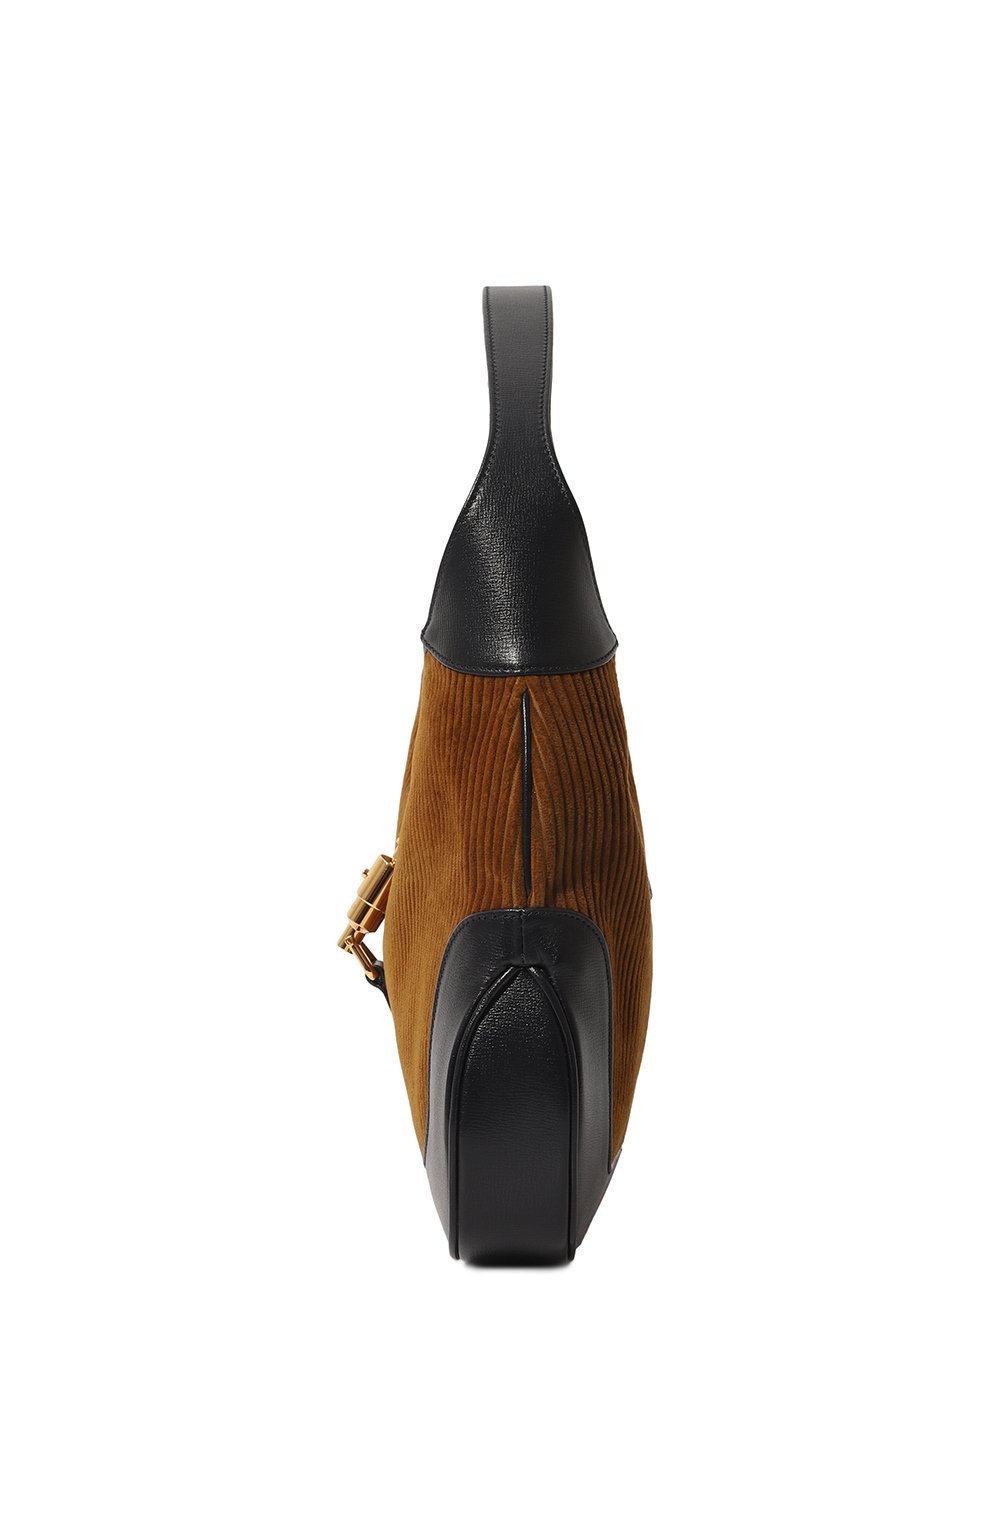 Женская сумка jackie 1961 medium GUCCI коричневого цвета, арт. 636710 2S8AG | Фото 4 (Сумки-технические: Сумки top-handle; Размер: medium; Материал: Текстиль)